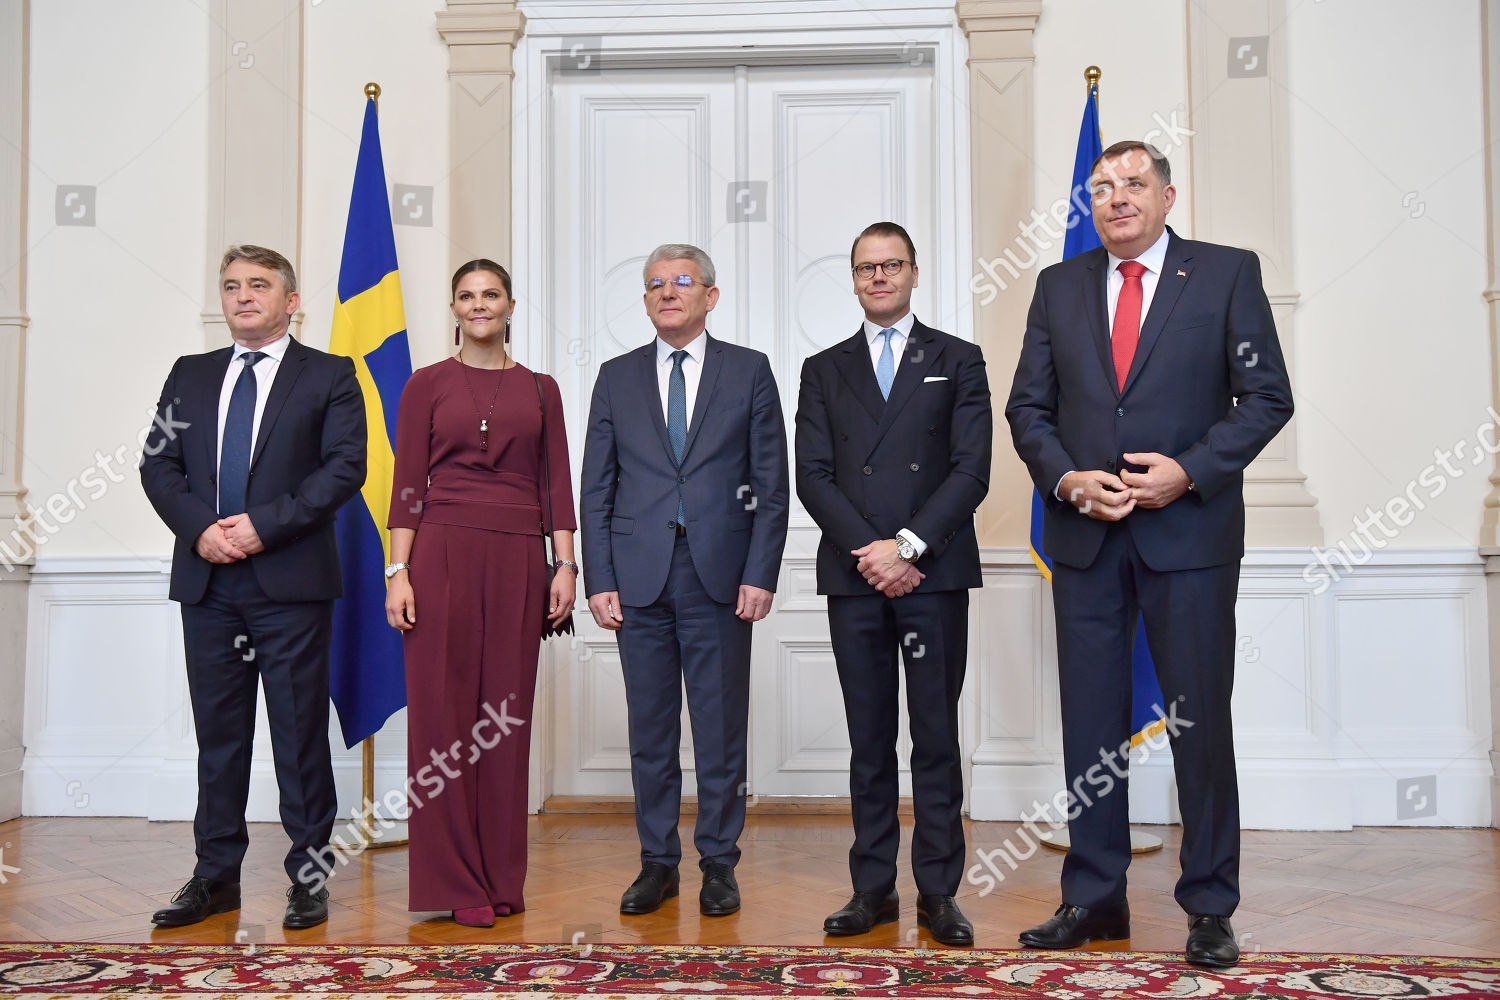 swedish-royals-visit-to-bosnia-herzegovina-shutterstock-editorial-10467349d.jpg